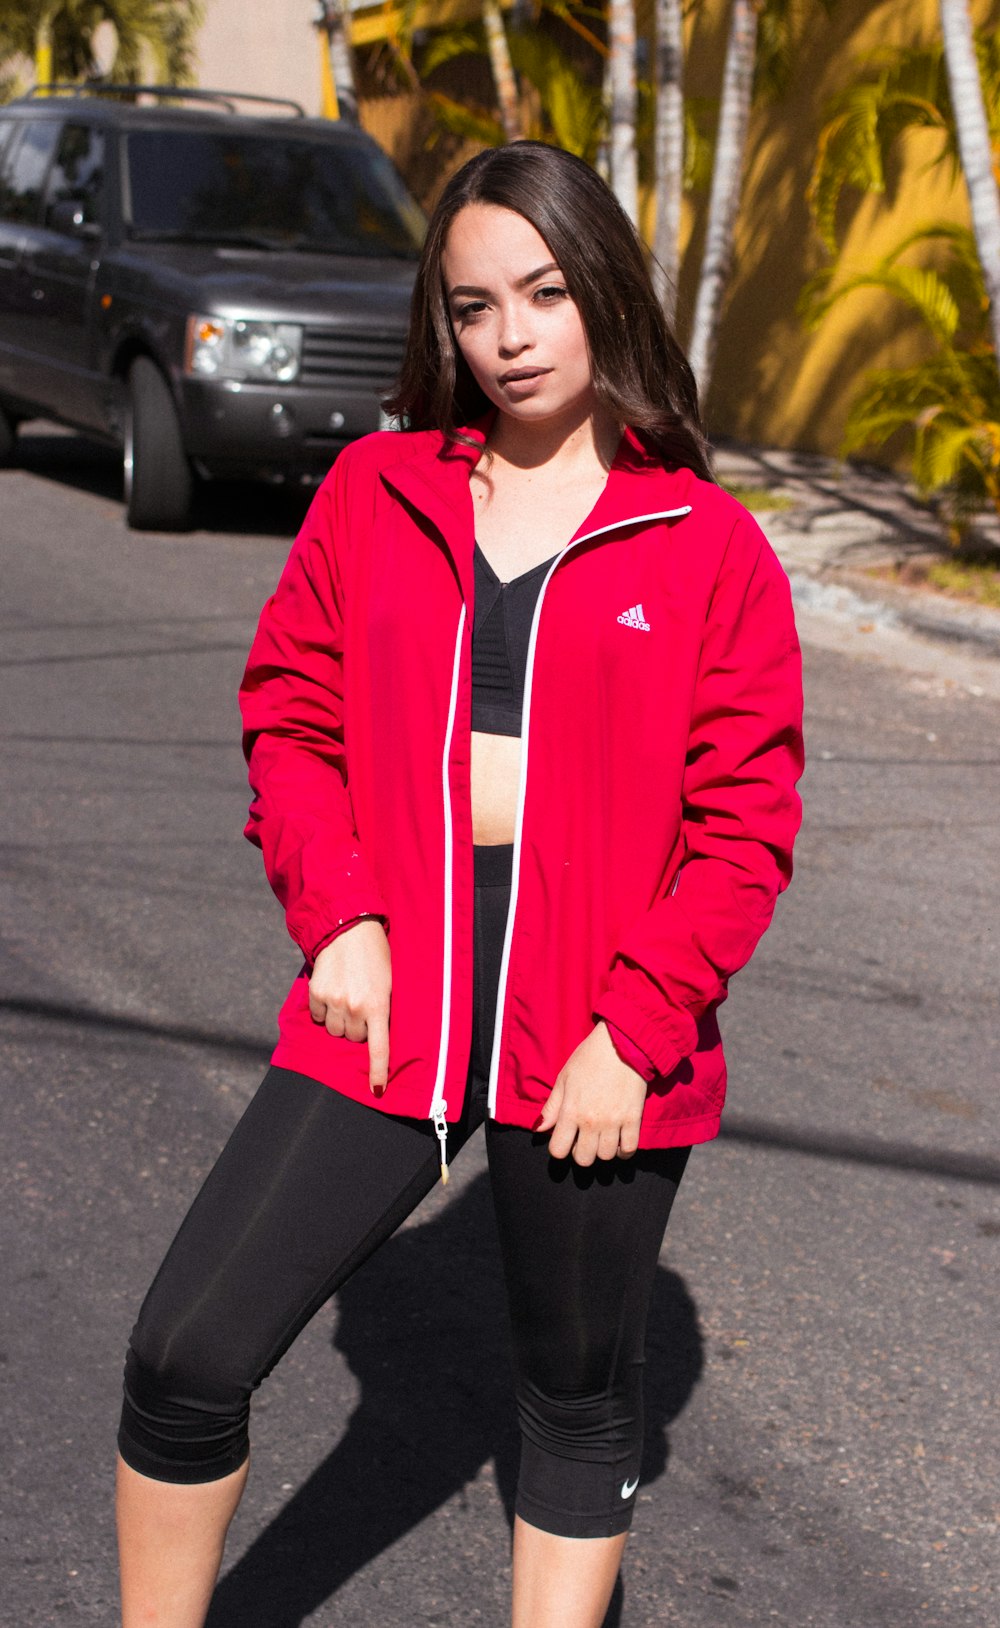 woman wearing red Adidas zip-up jacket and black leggings photo – Free  Clothing Image on Unsplash